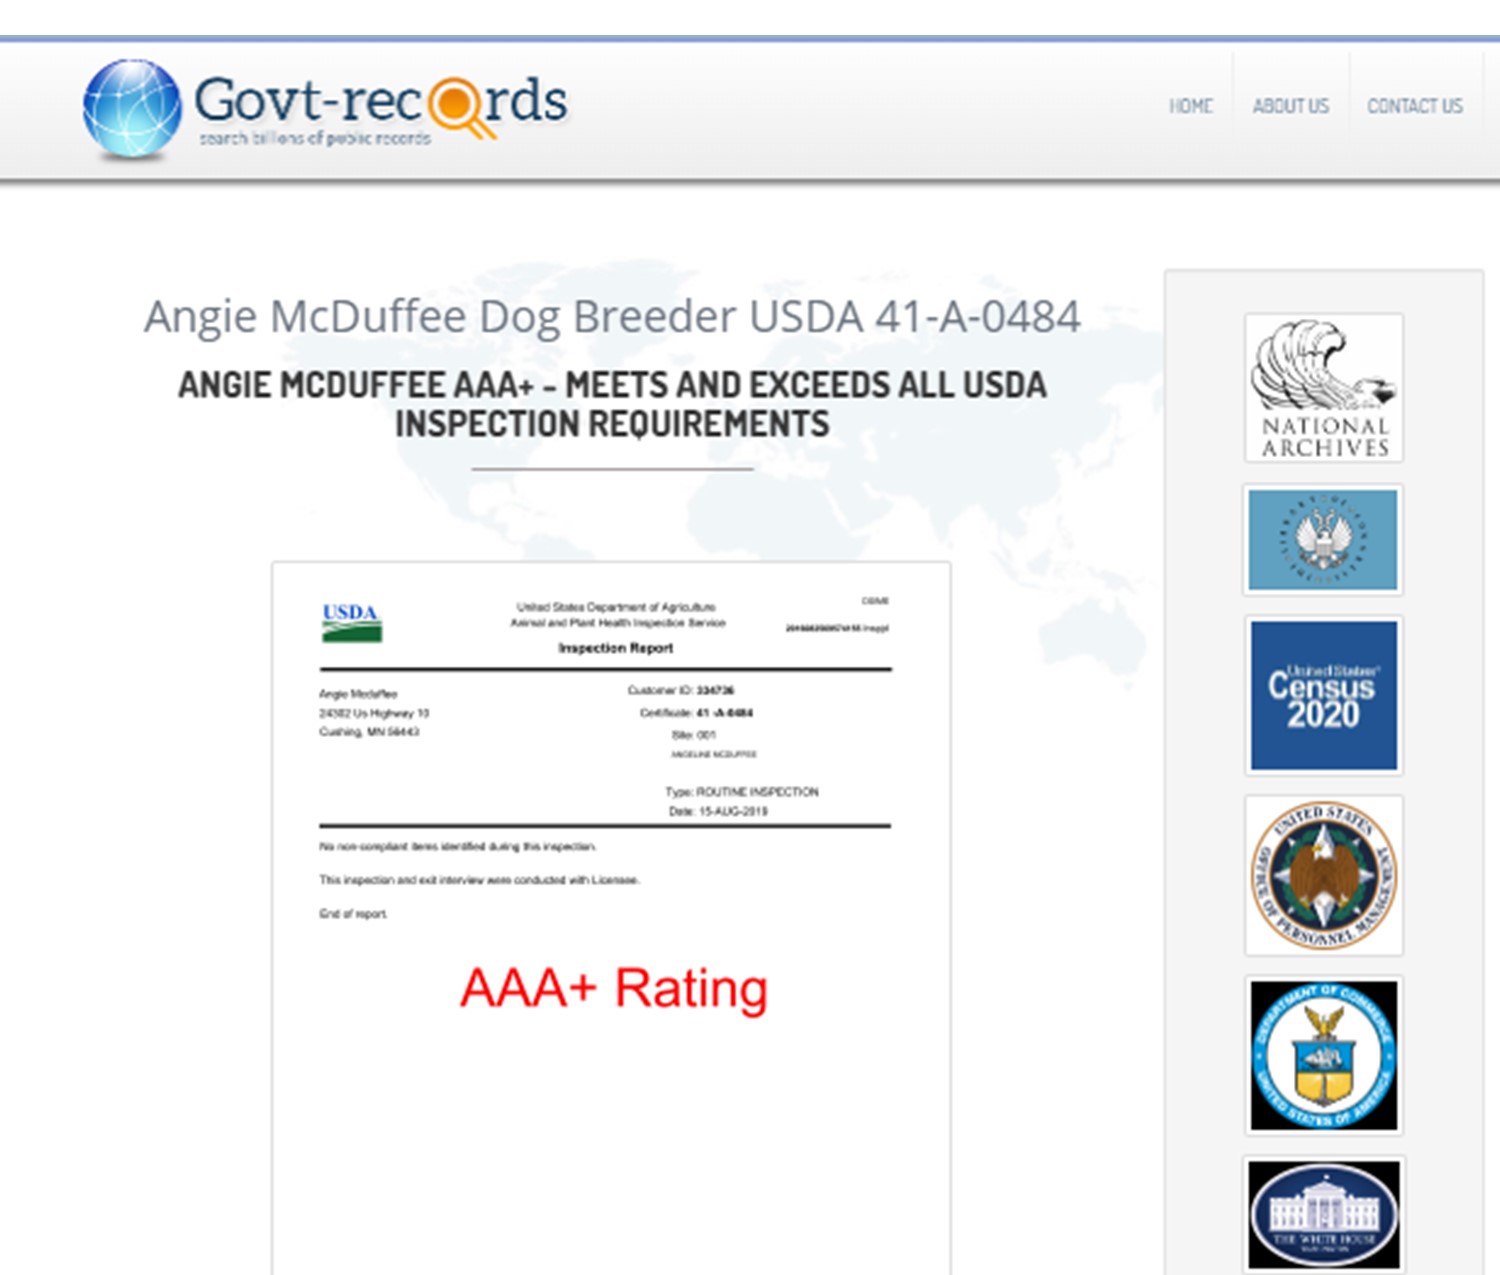 Angie McDuffee dog breeder USDA Report